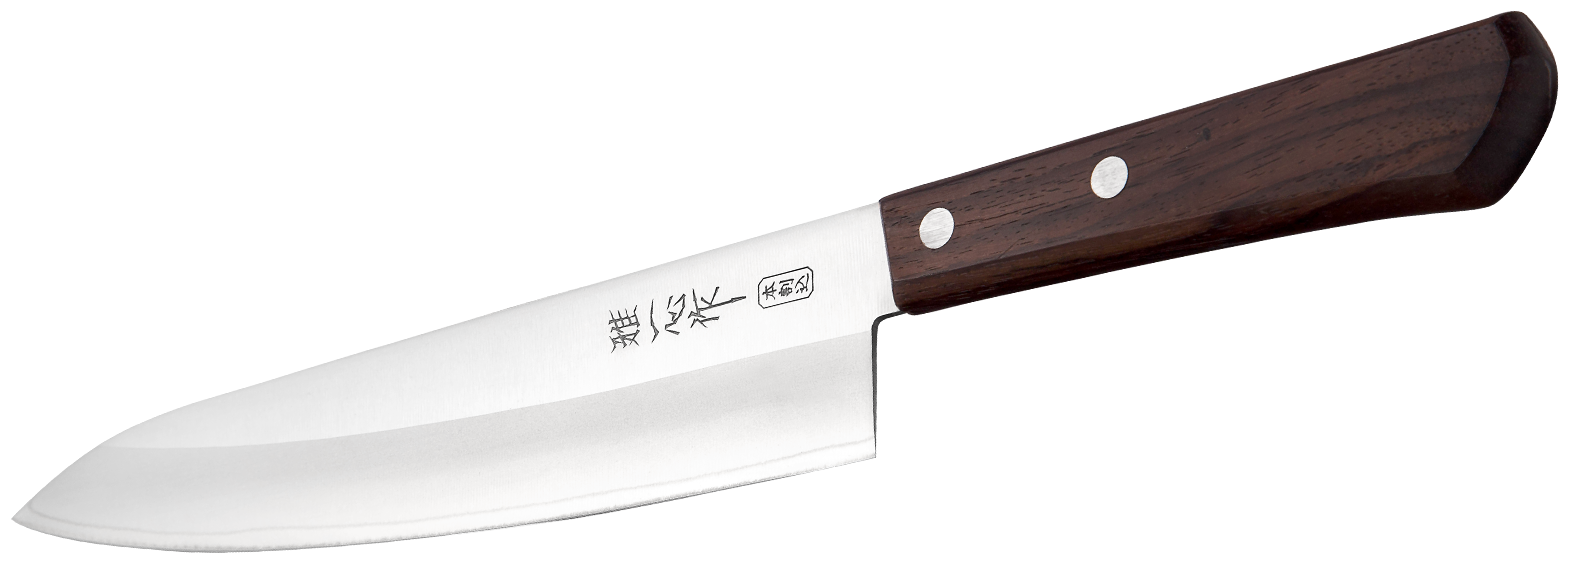 Шеф-нож Kanetsugu Special offer, лезвие 21 см